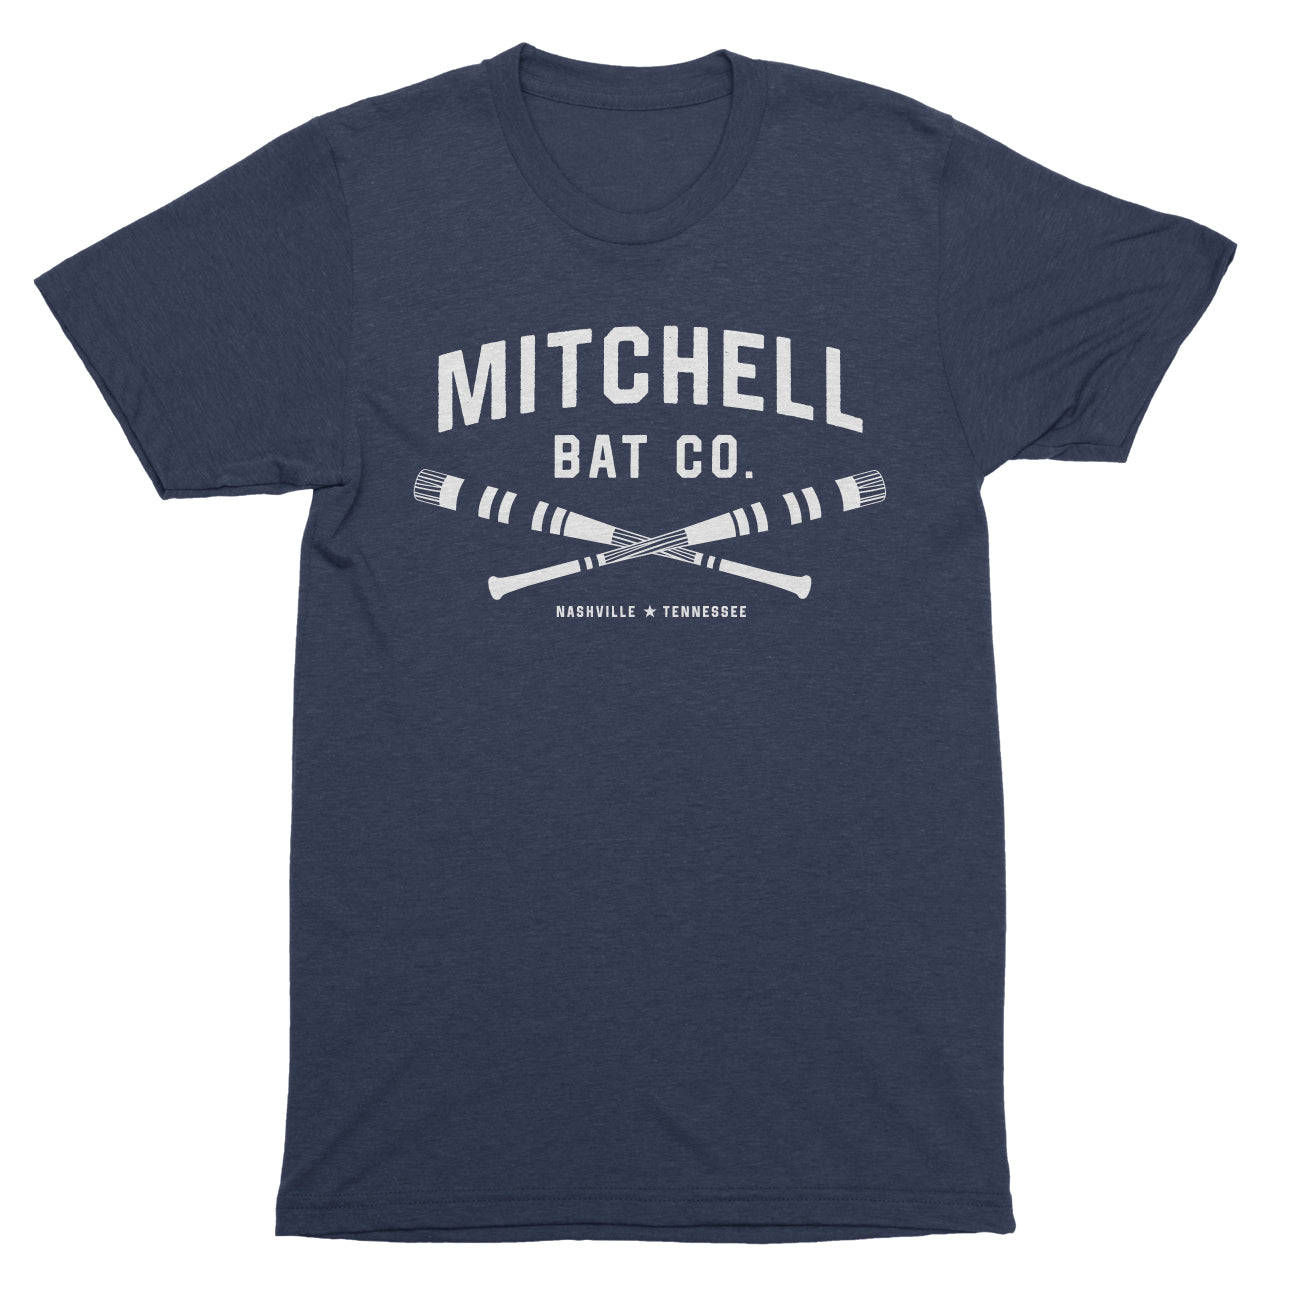 Cross bat Mitchell Bat Co. short sleeve tee (navy)